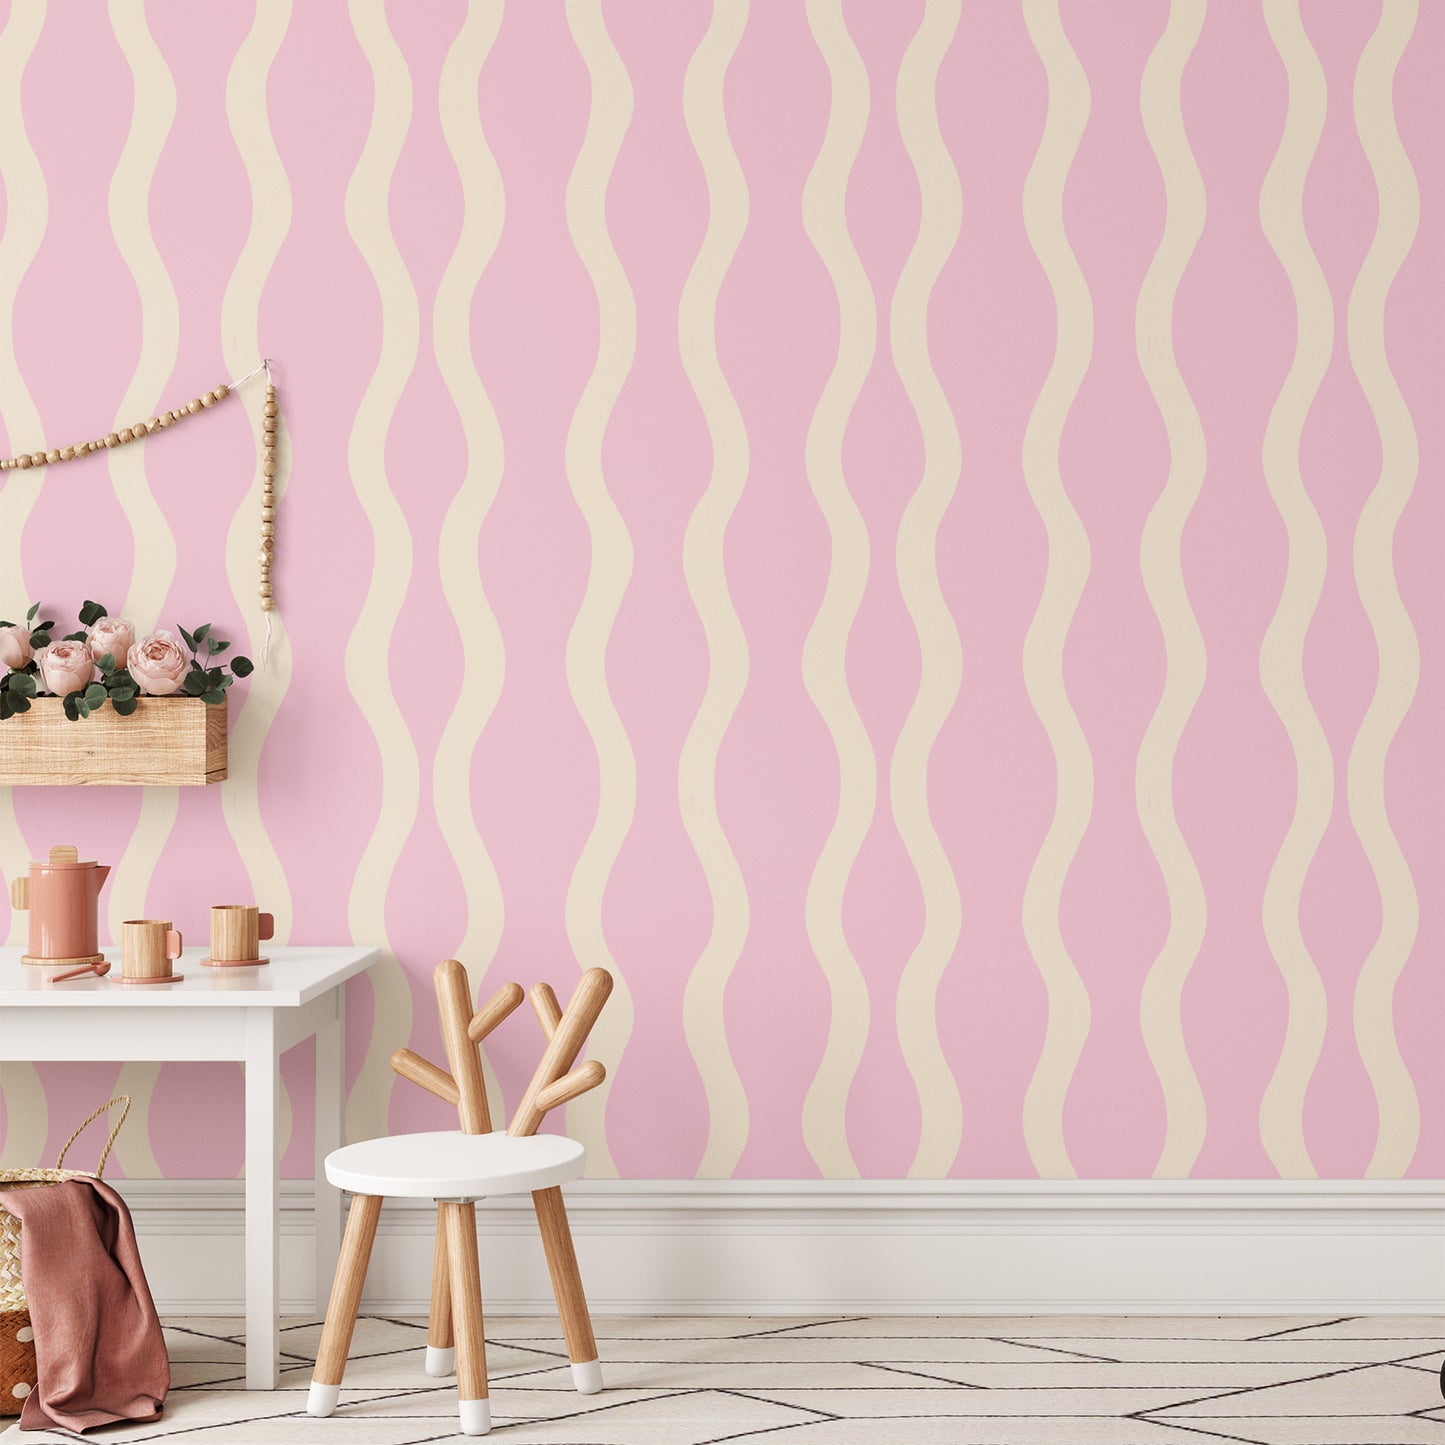 Playroom featuring Modern Wavy Lines Wallpaper in Bubblegum Pink by artist Brenda Bird for Ayara